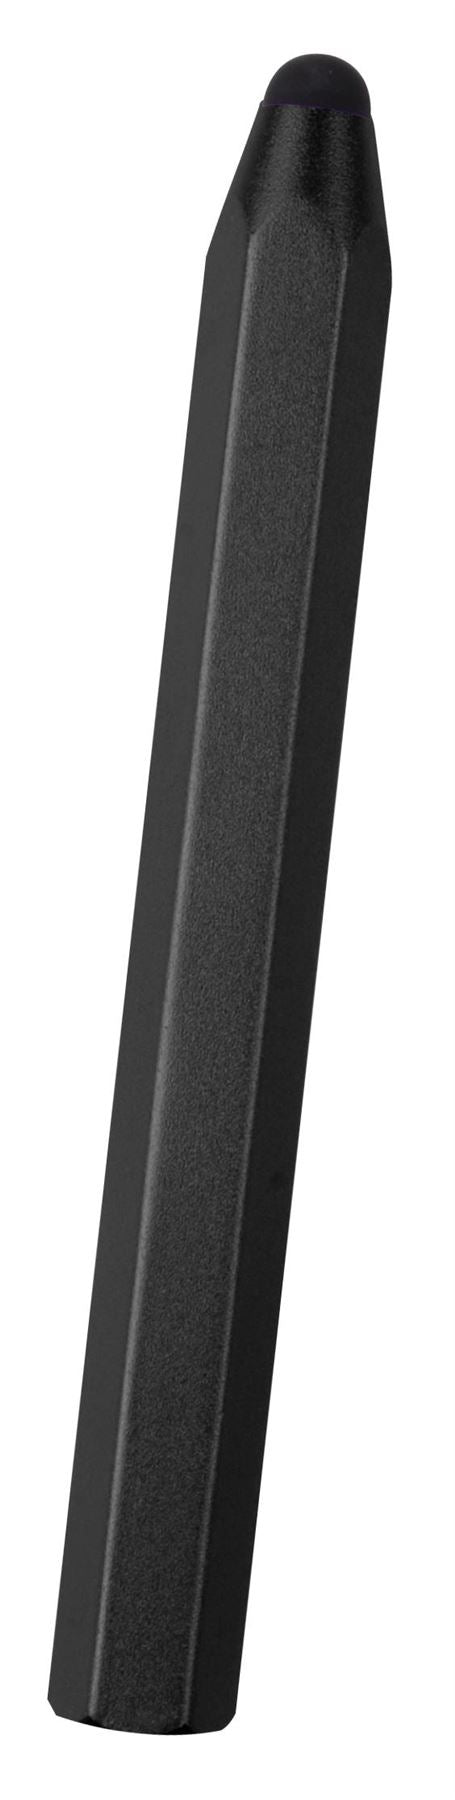 Black Aluminium Crayon Shaped Stylus for iPad iPhone Tablet Smartphone